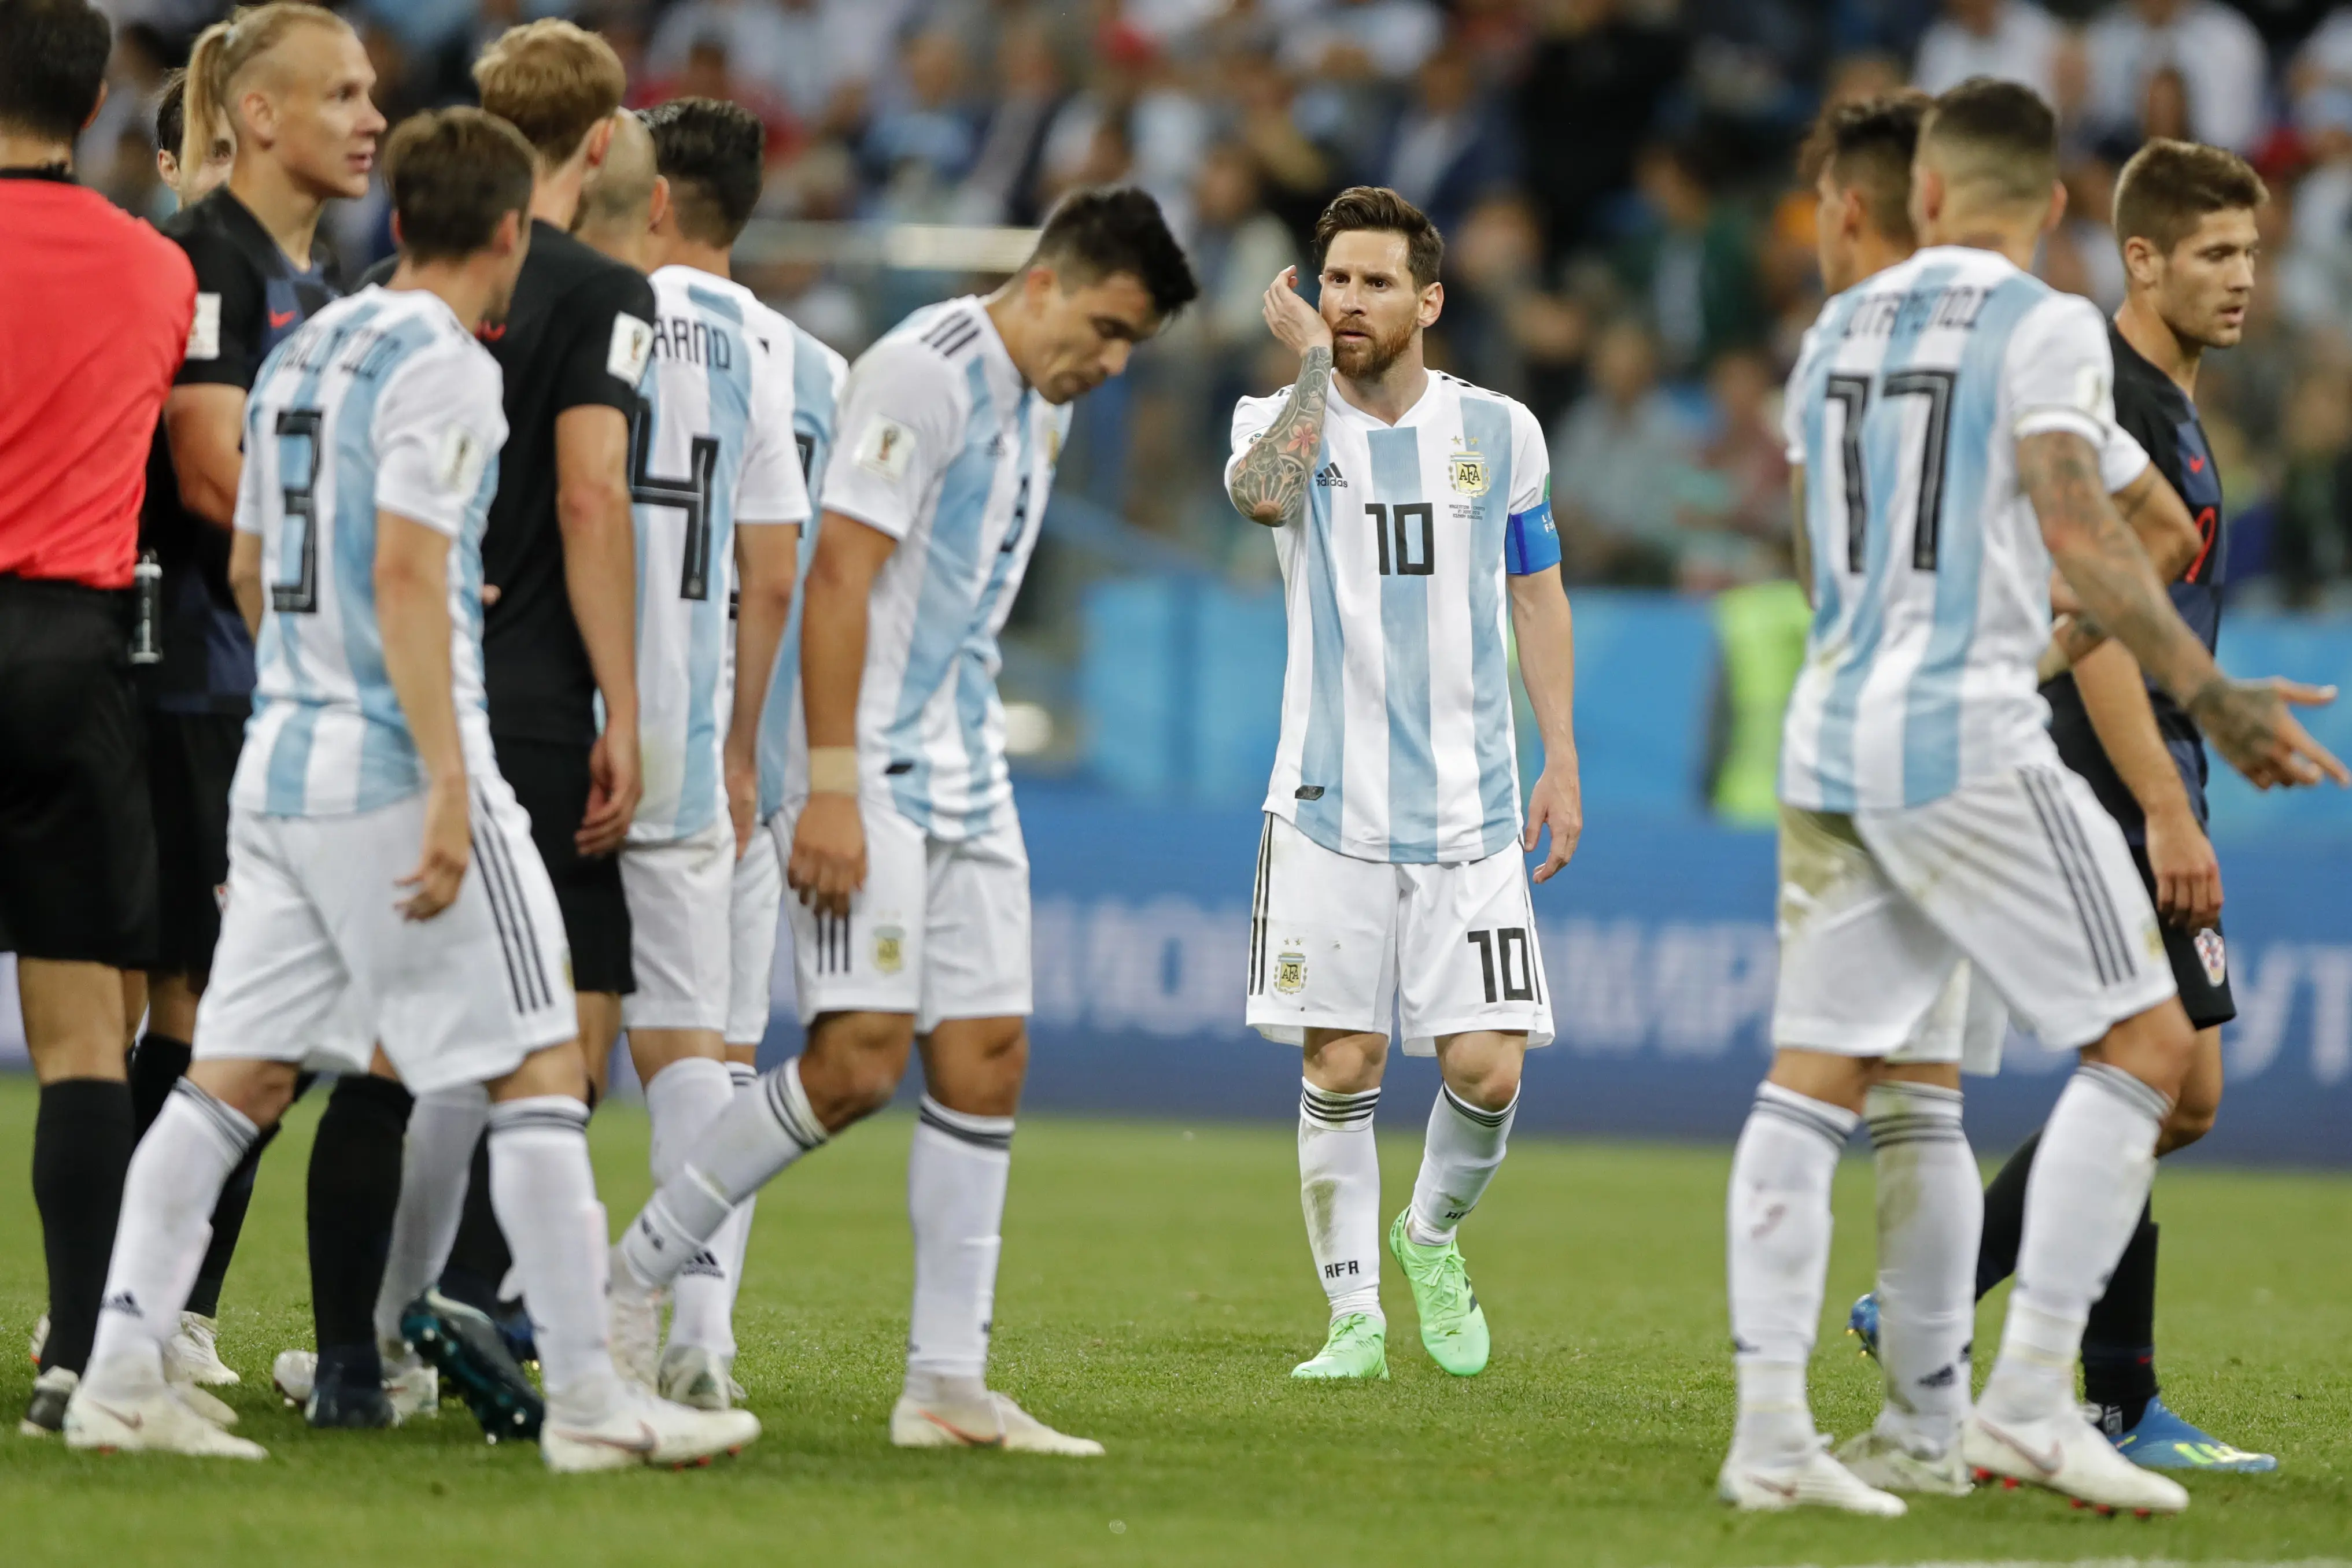 Para pemain timnas Argentina setelah dilumat Kroasia. (AP Photo/Ricardo Mazalan)